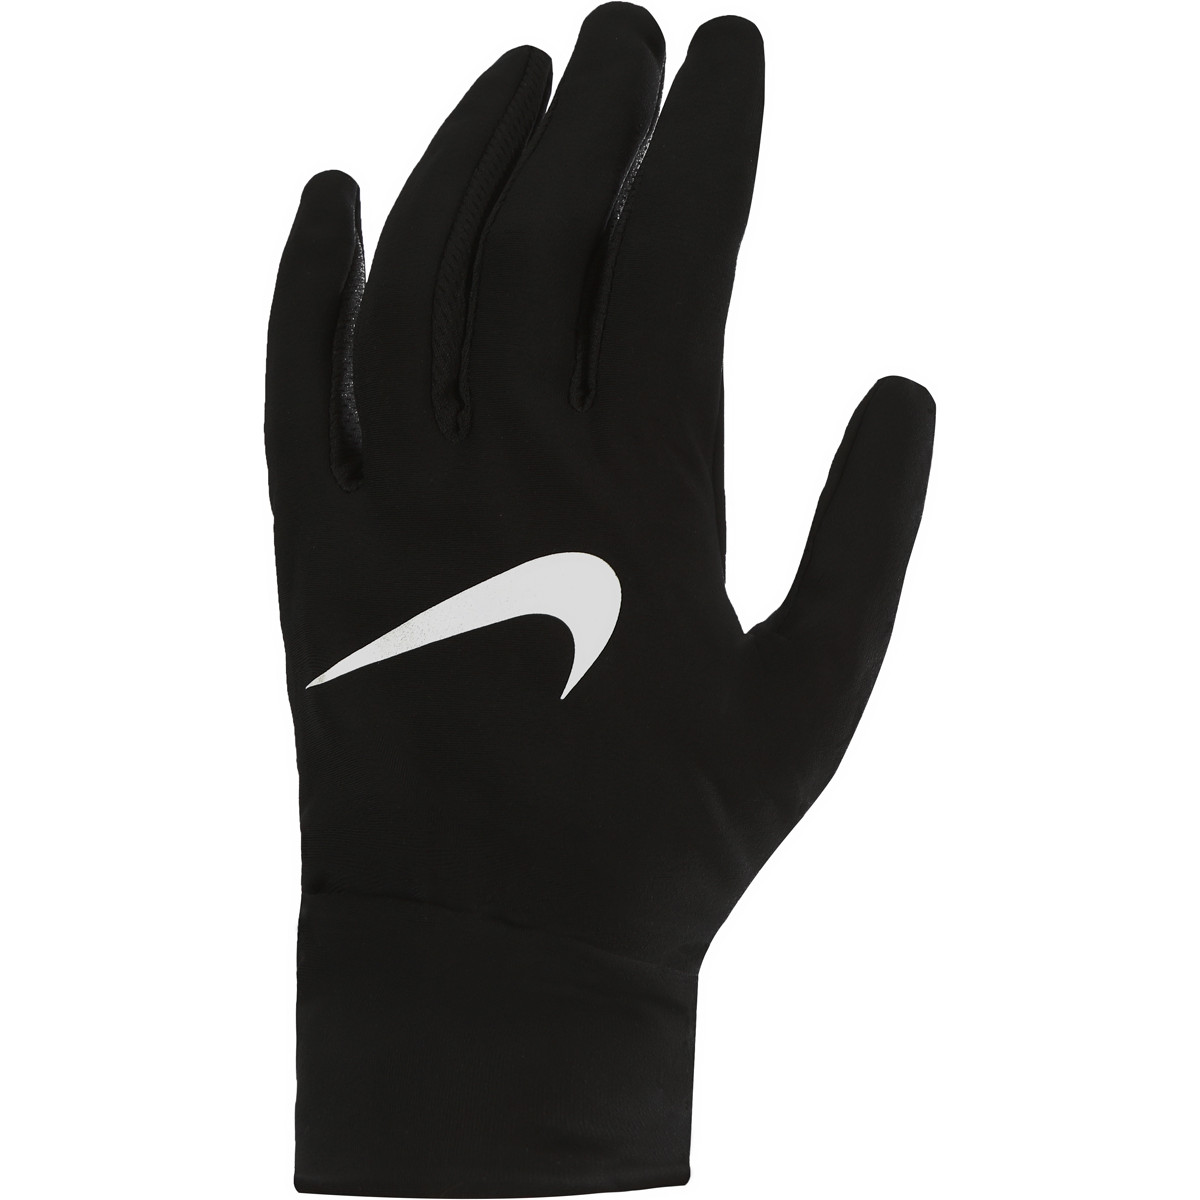 Les cinq meilleurs gants de running Nike. Nike FR